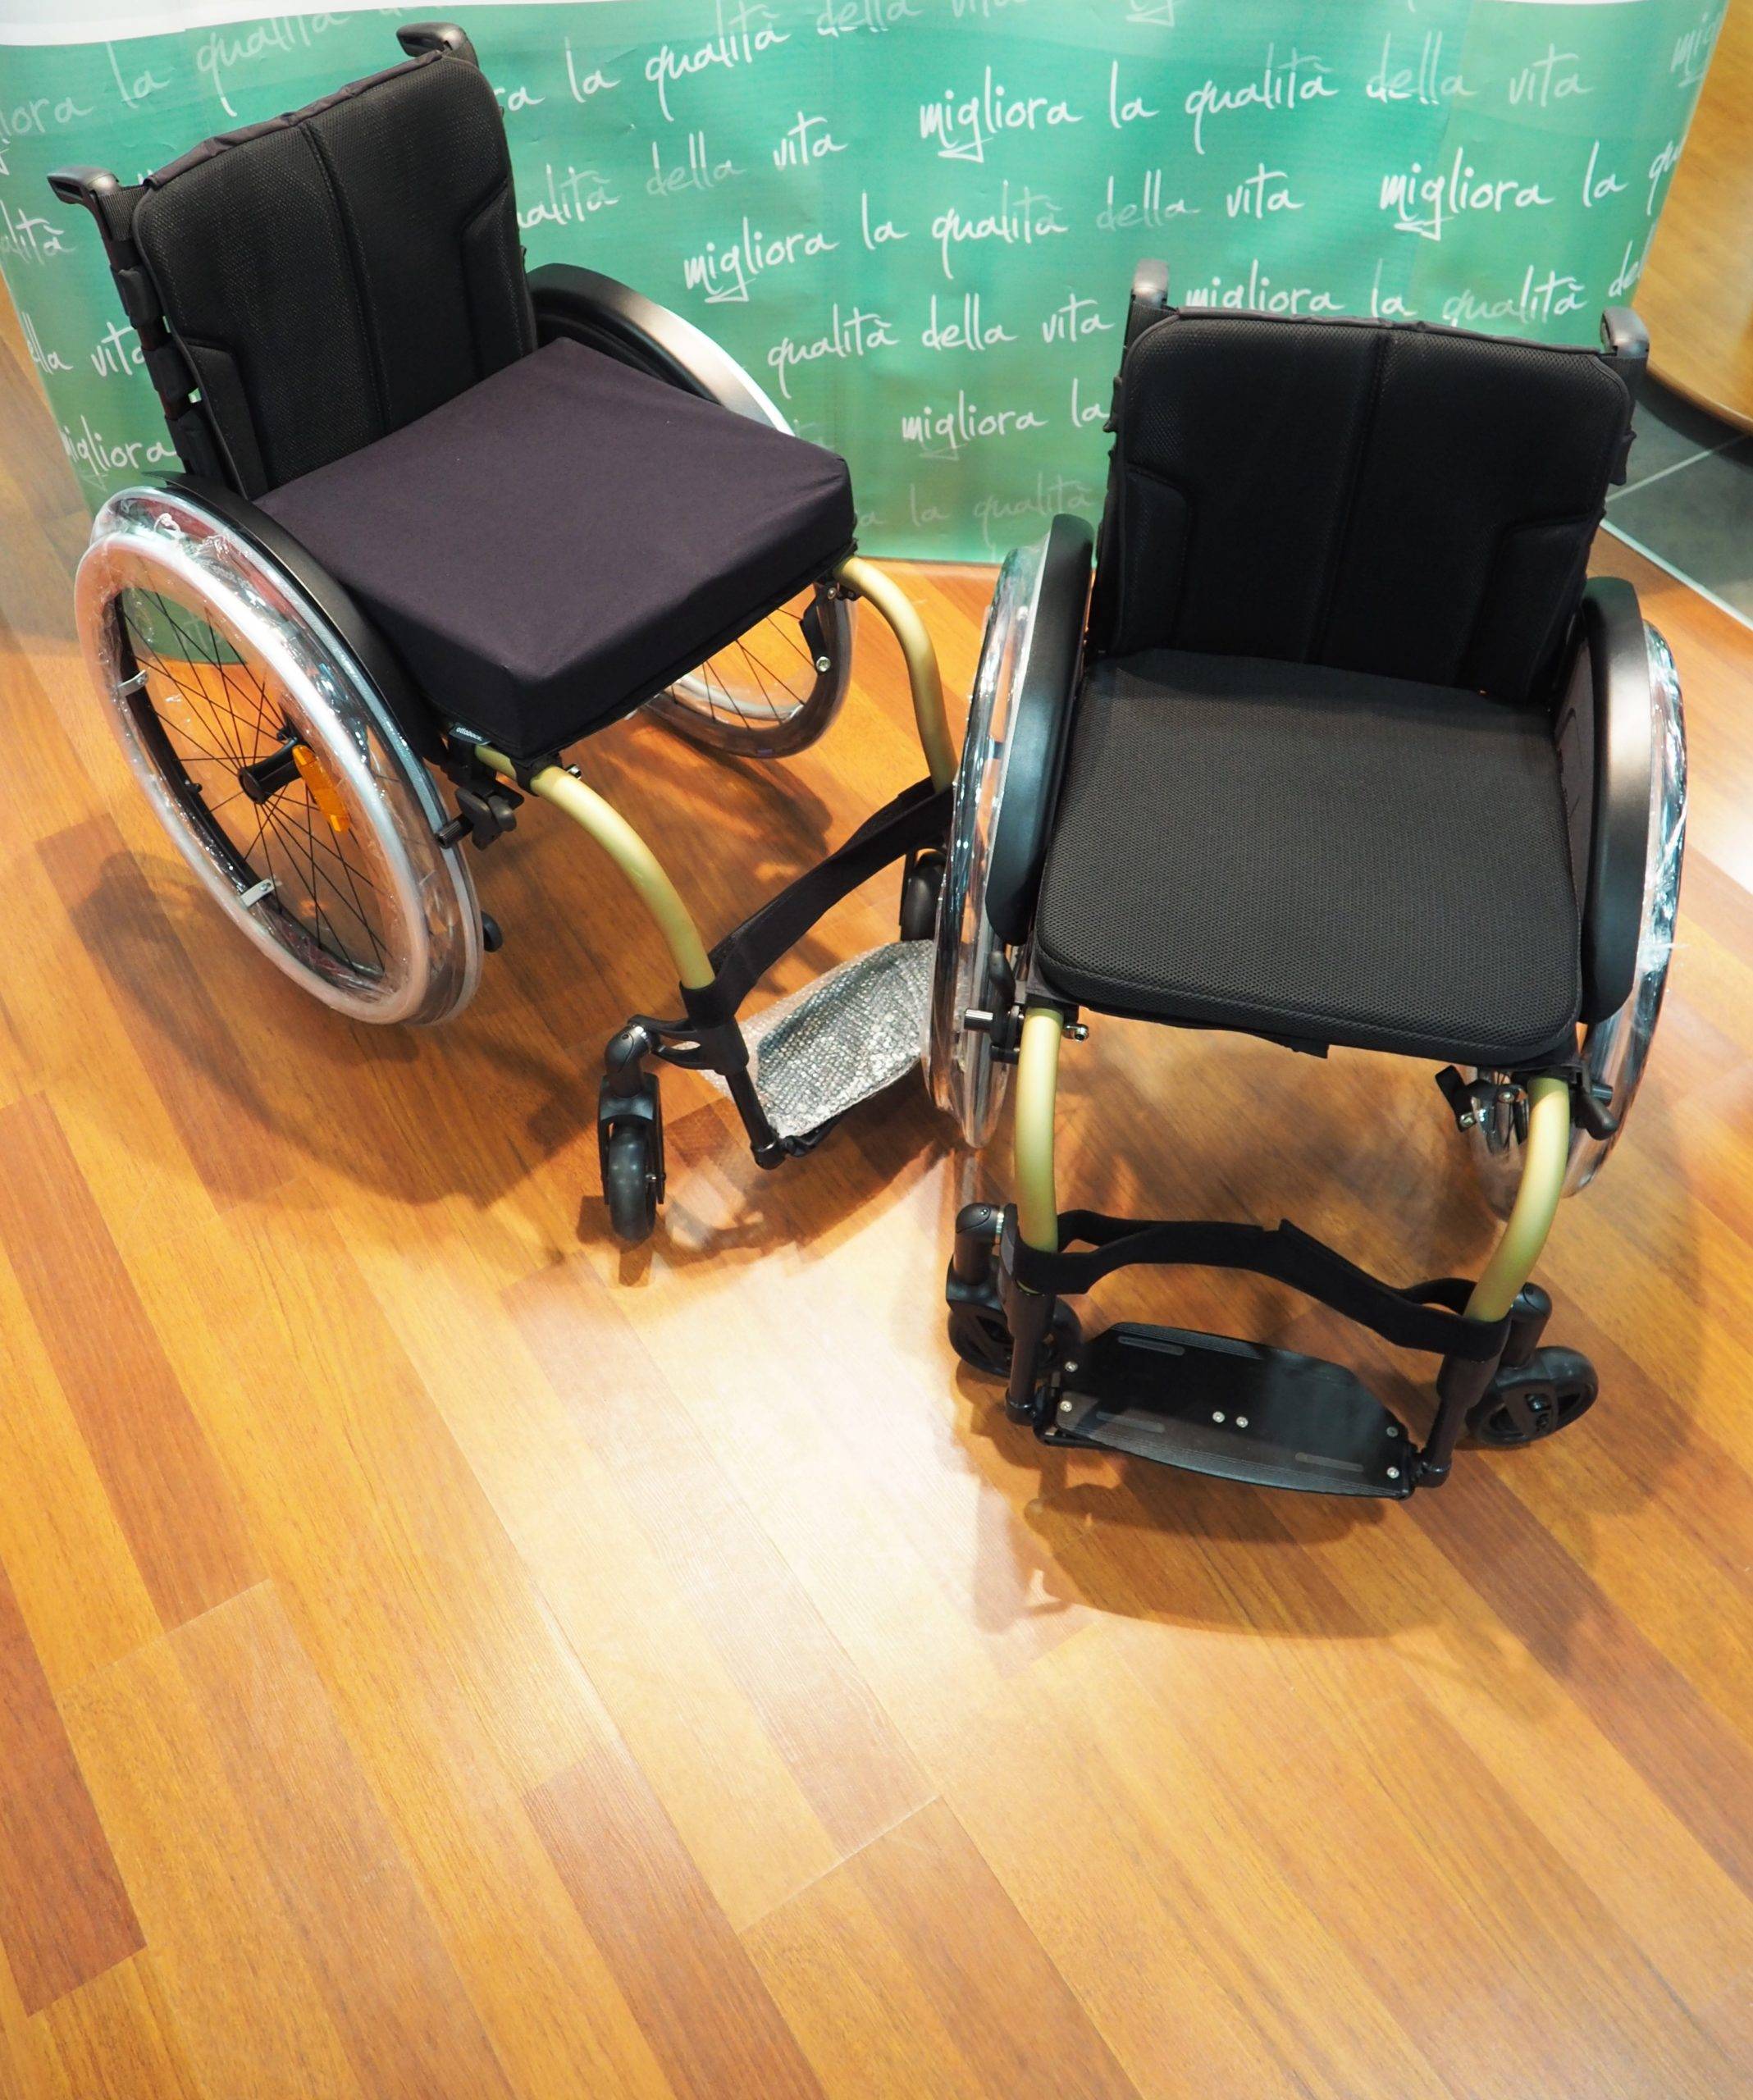 OTR Ortopedia - Ottobock - sezione Mobility - Wheelchair